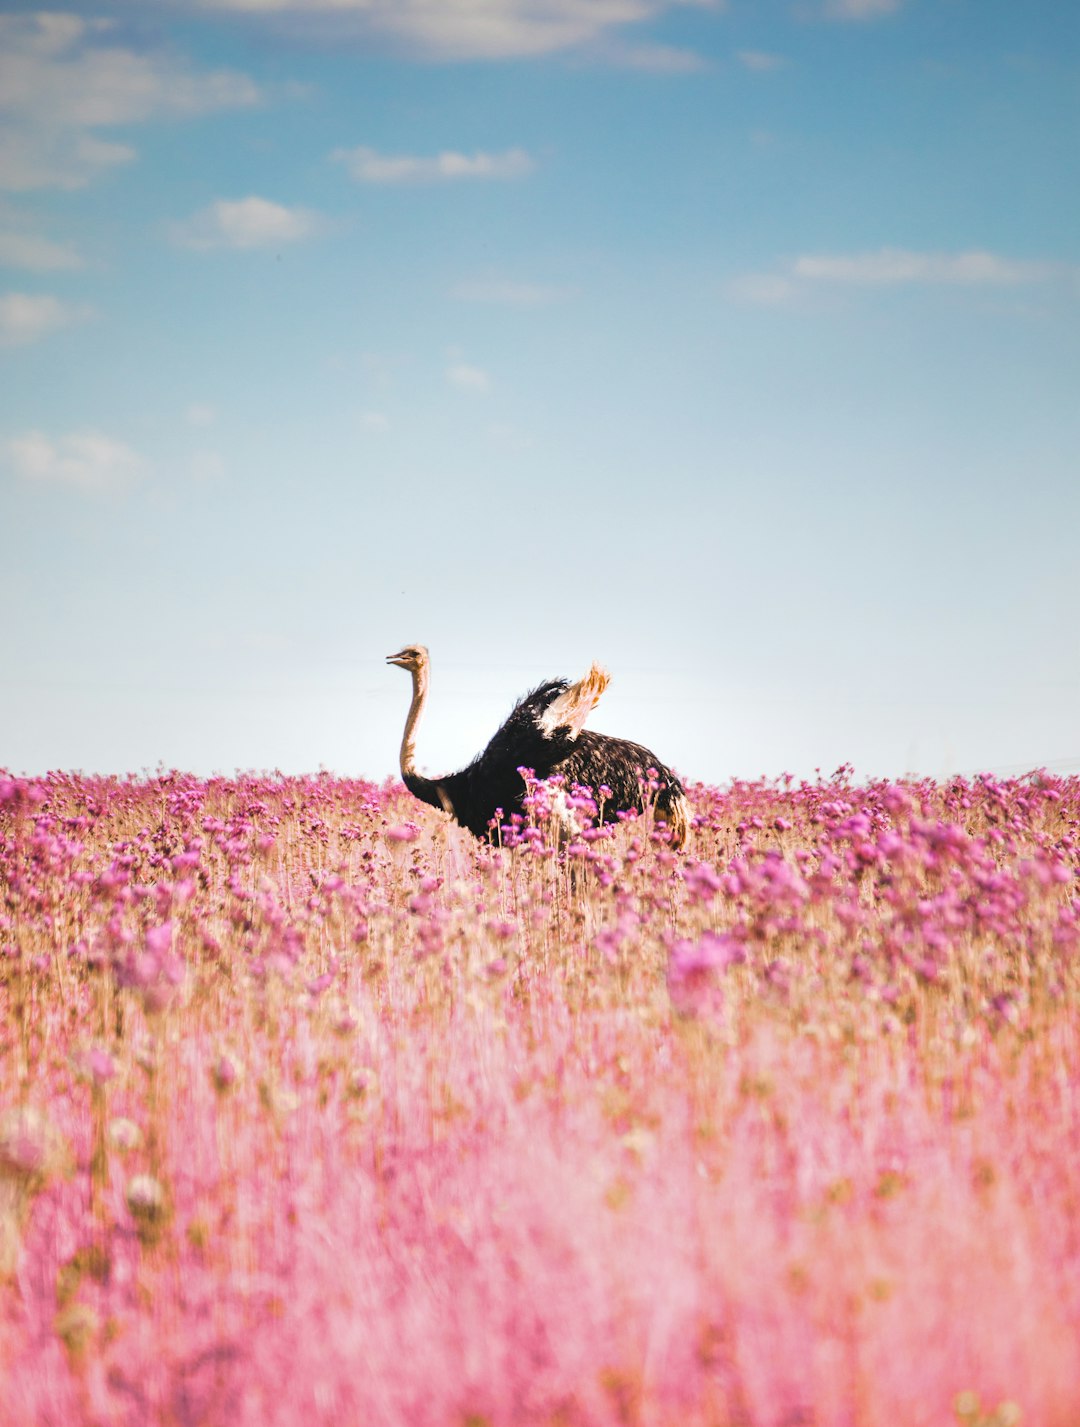  black and white turkey on pink flower field under blue sky during daytime ostrich